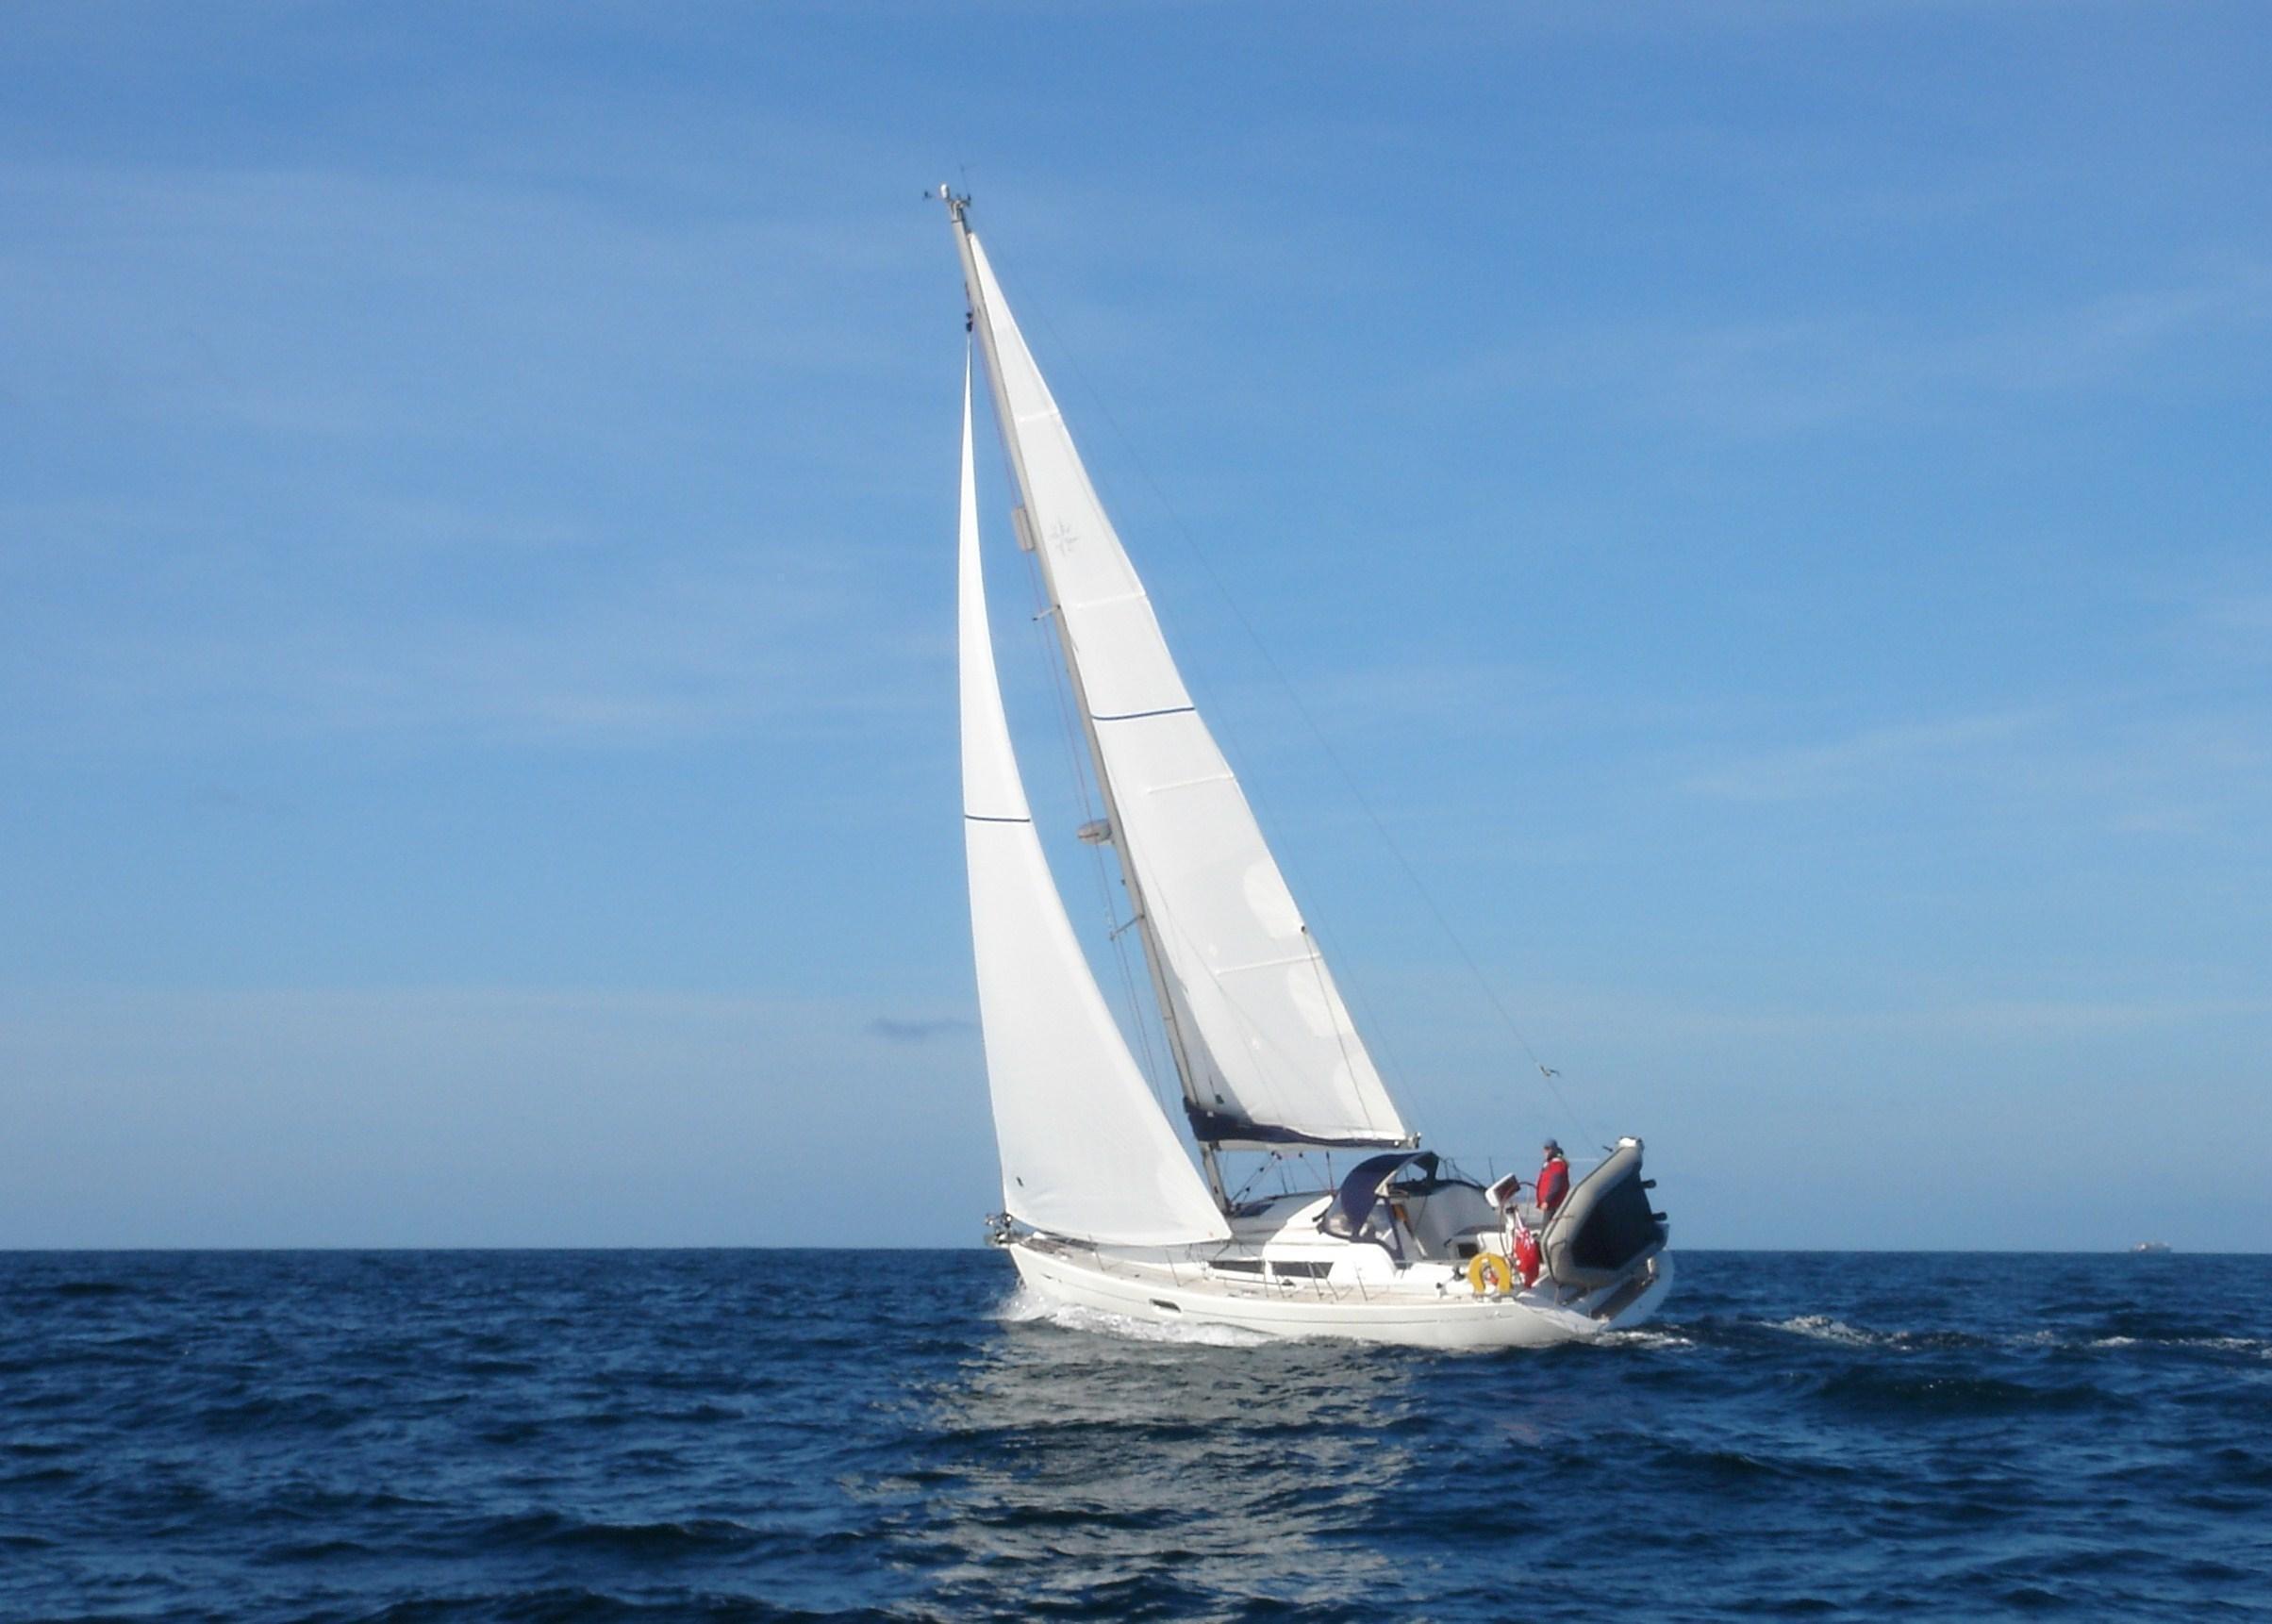 Jeanneau Sun Odyssey 36i, Kip Marina moving to Dunstaffnage on 29th April 2014, Renfrewshire